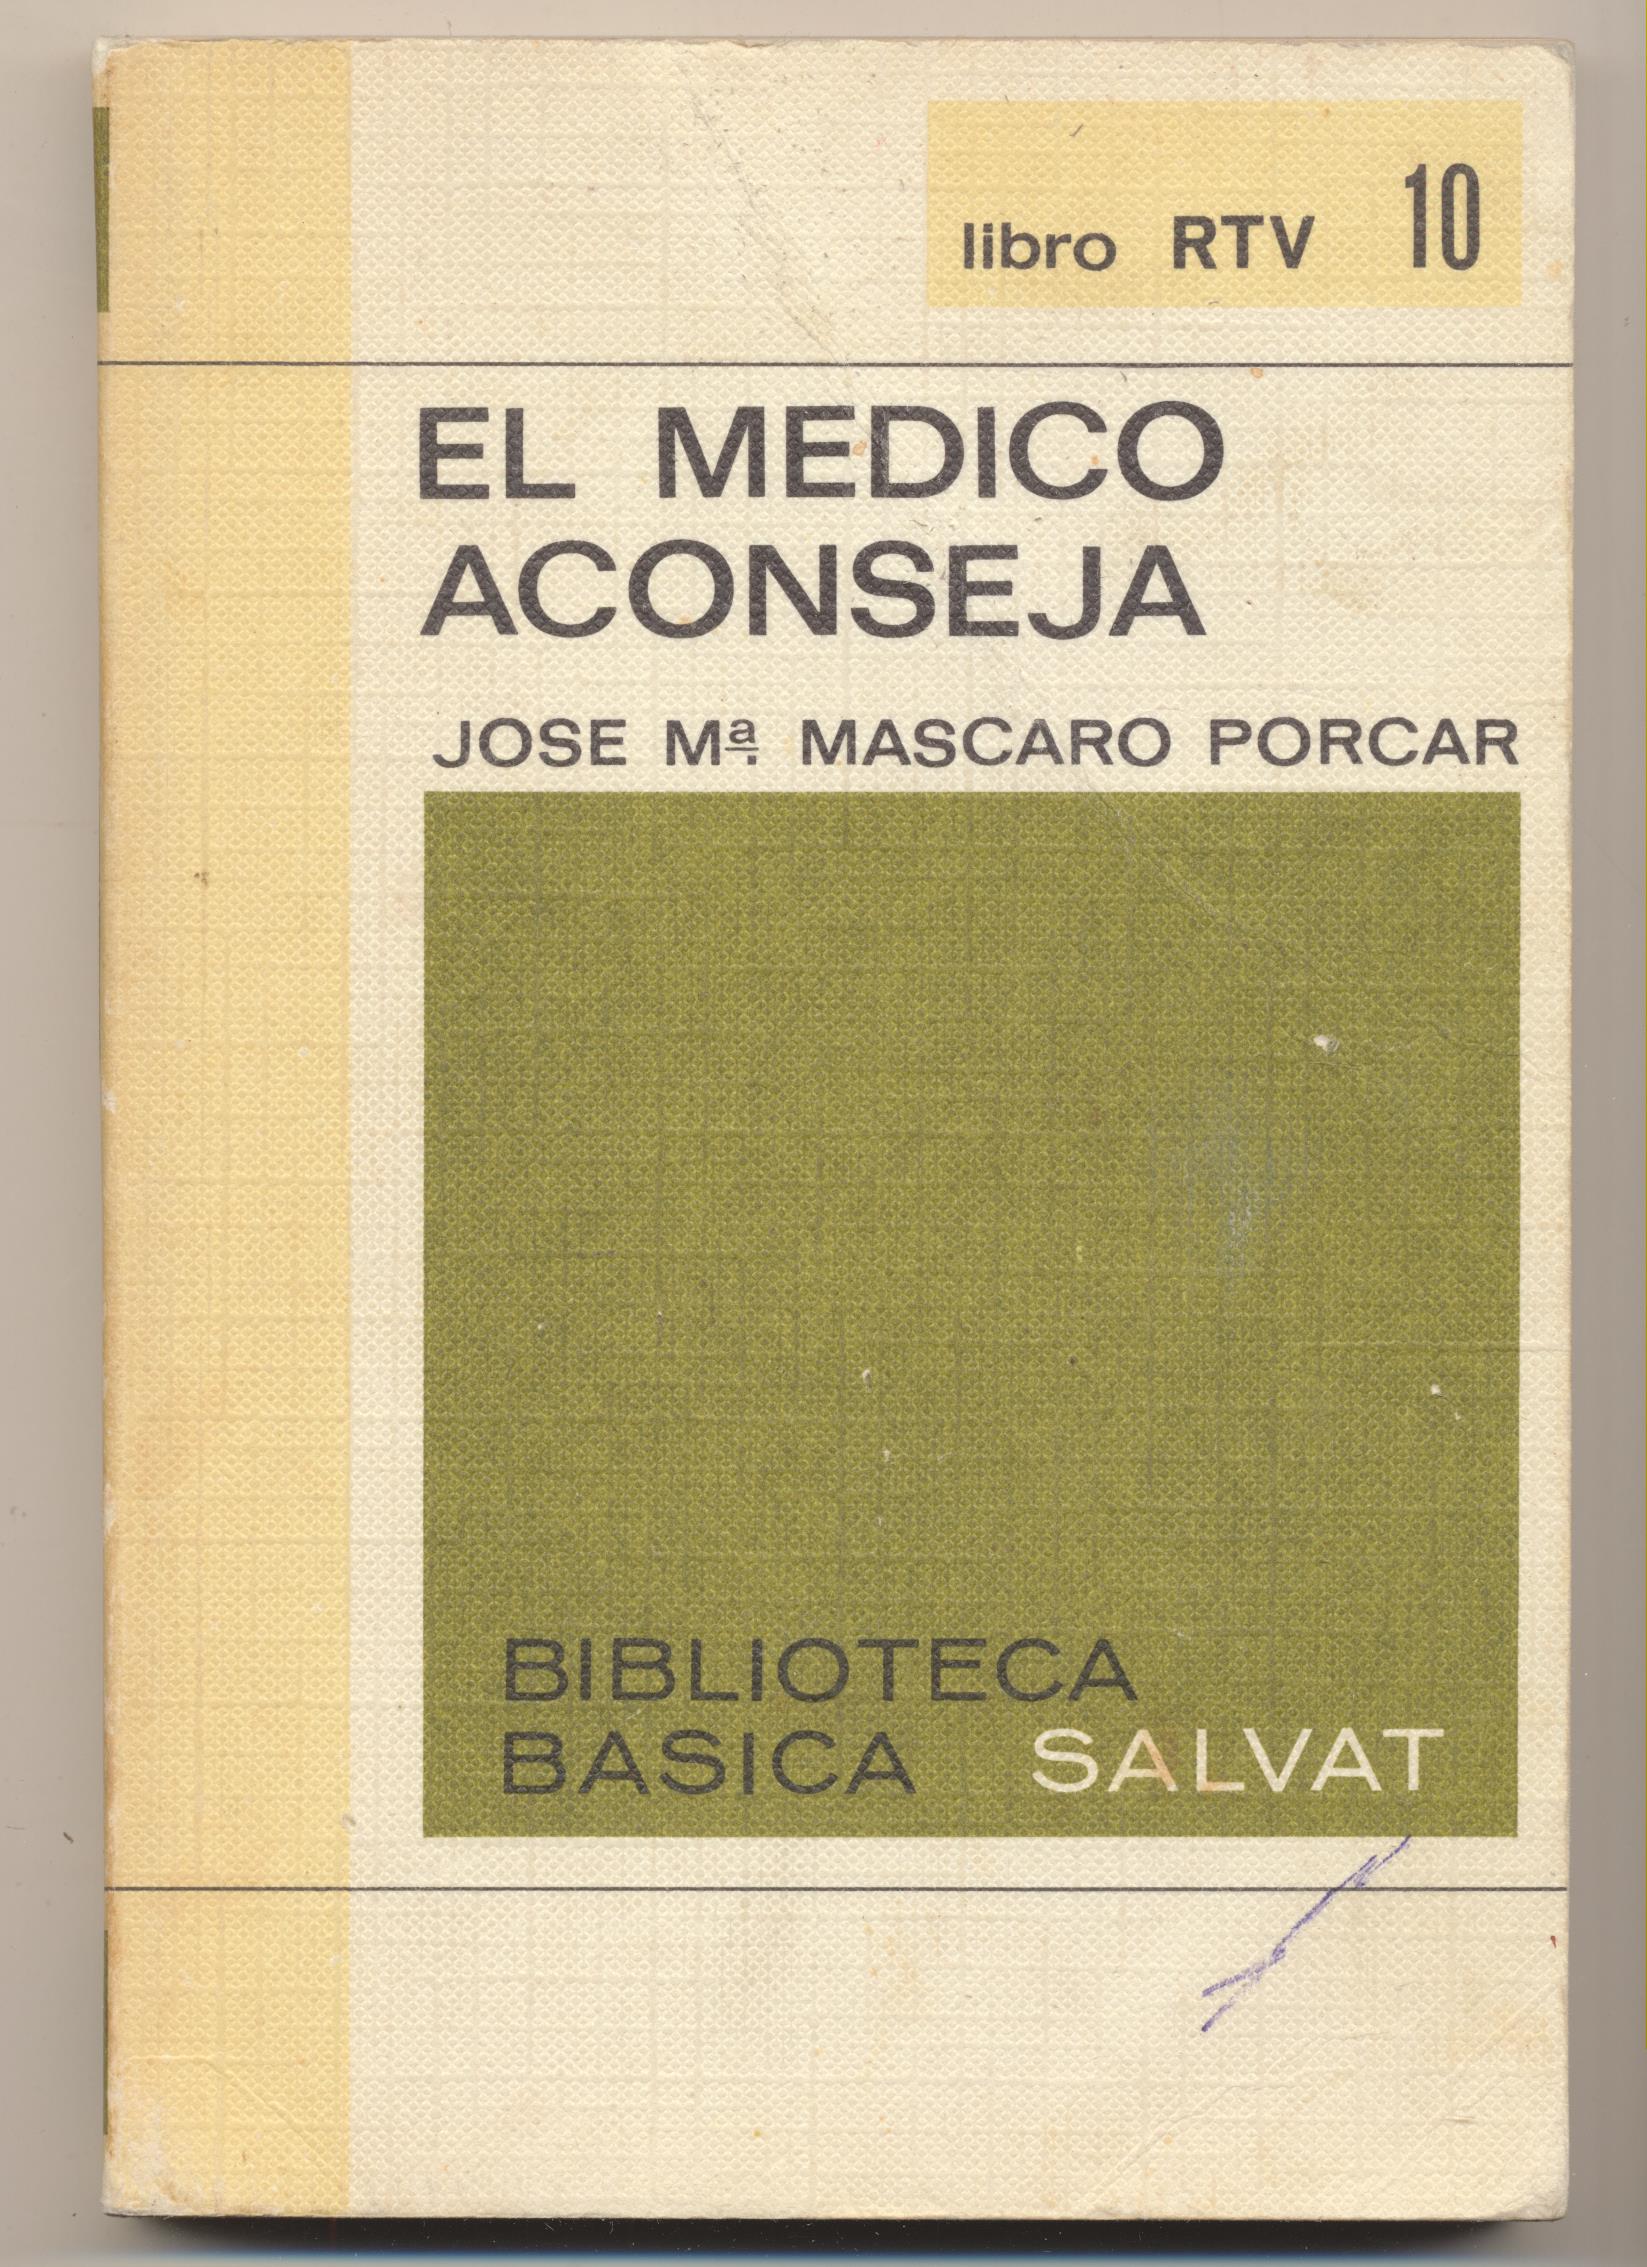 José Mª Mascaro Porcar. El Medico aconseja. Salvat 1969